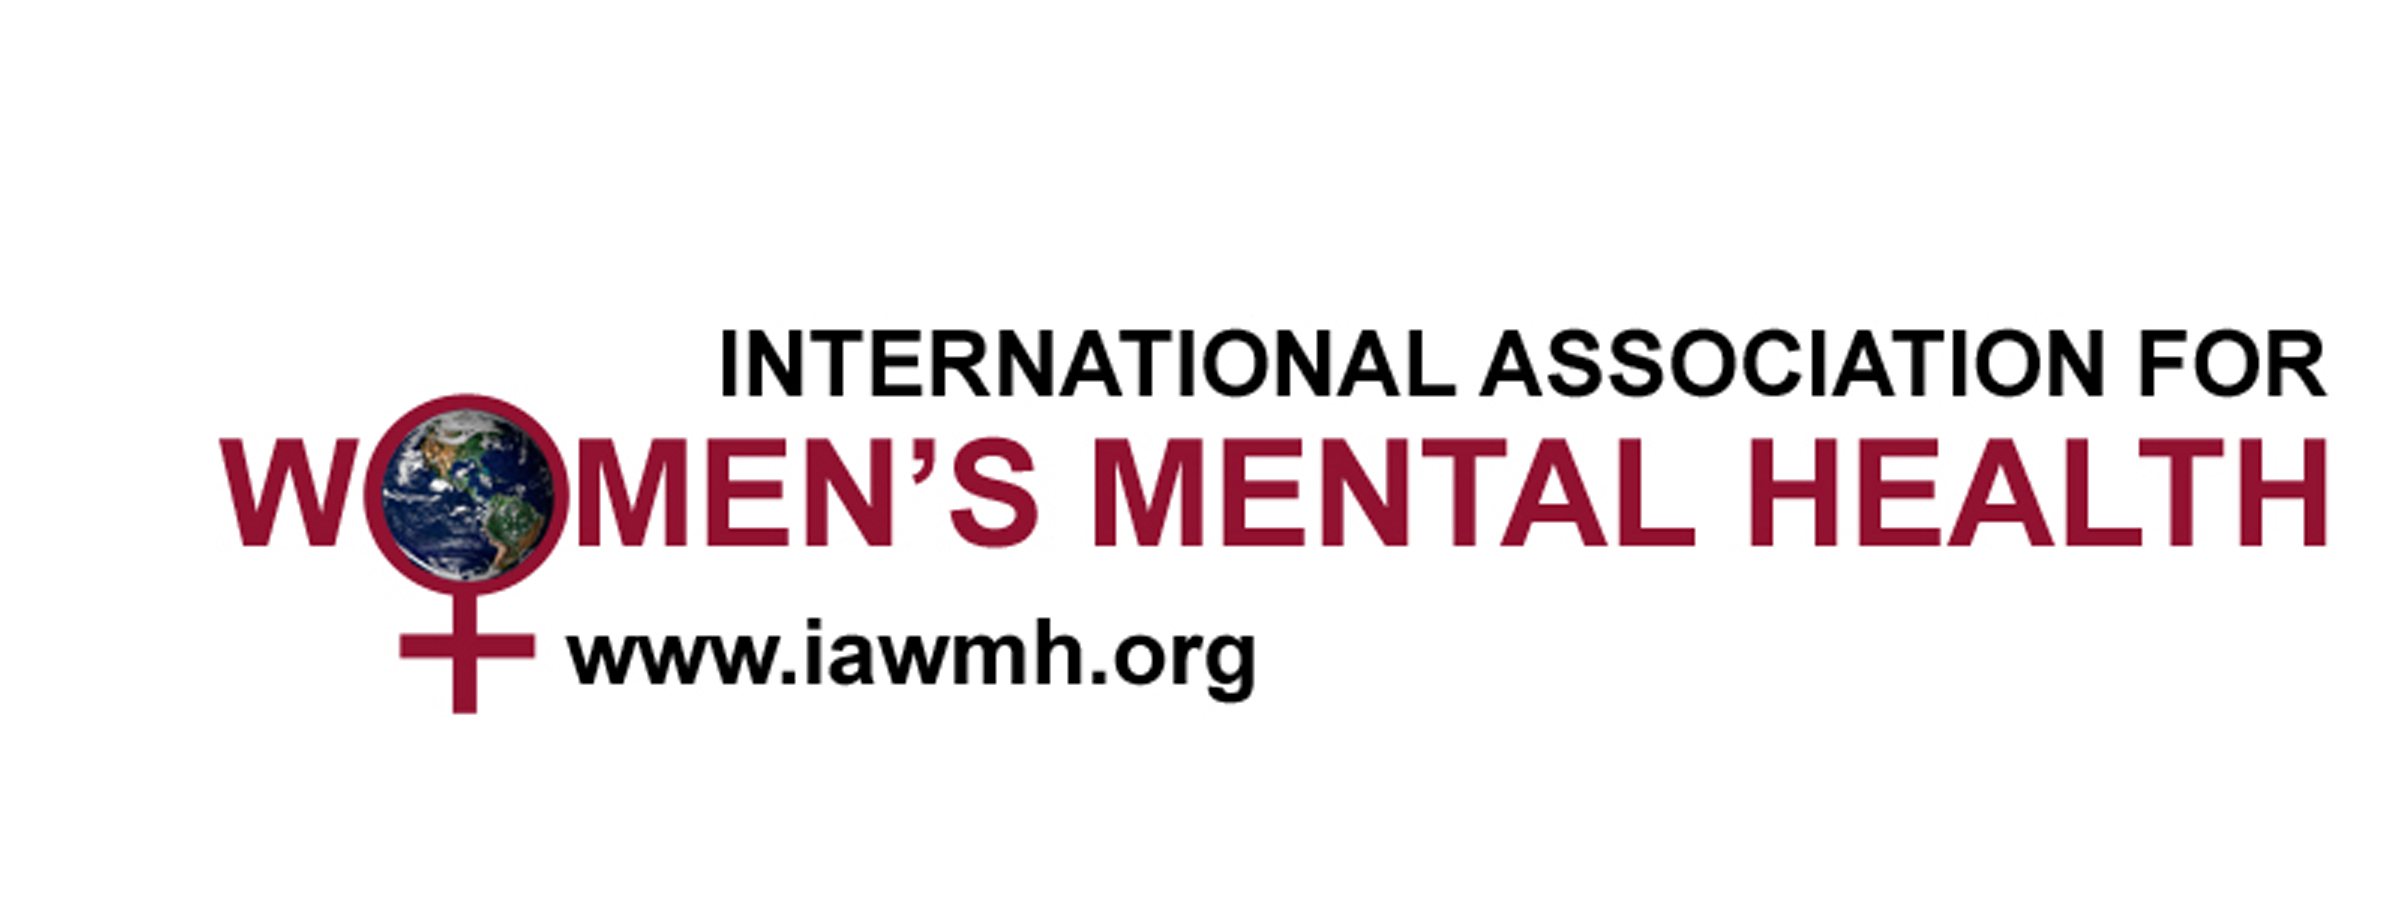 IAWMH 2022 - 9th World Congress on Women's Mental Health 2022